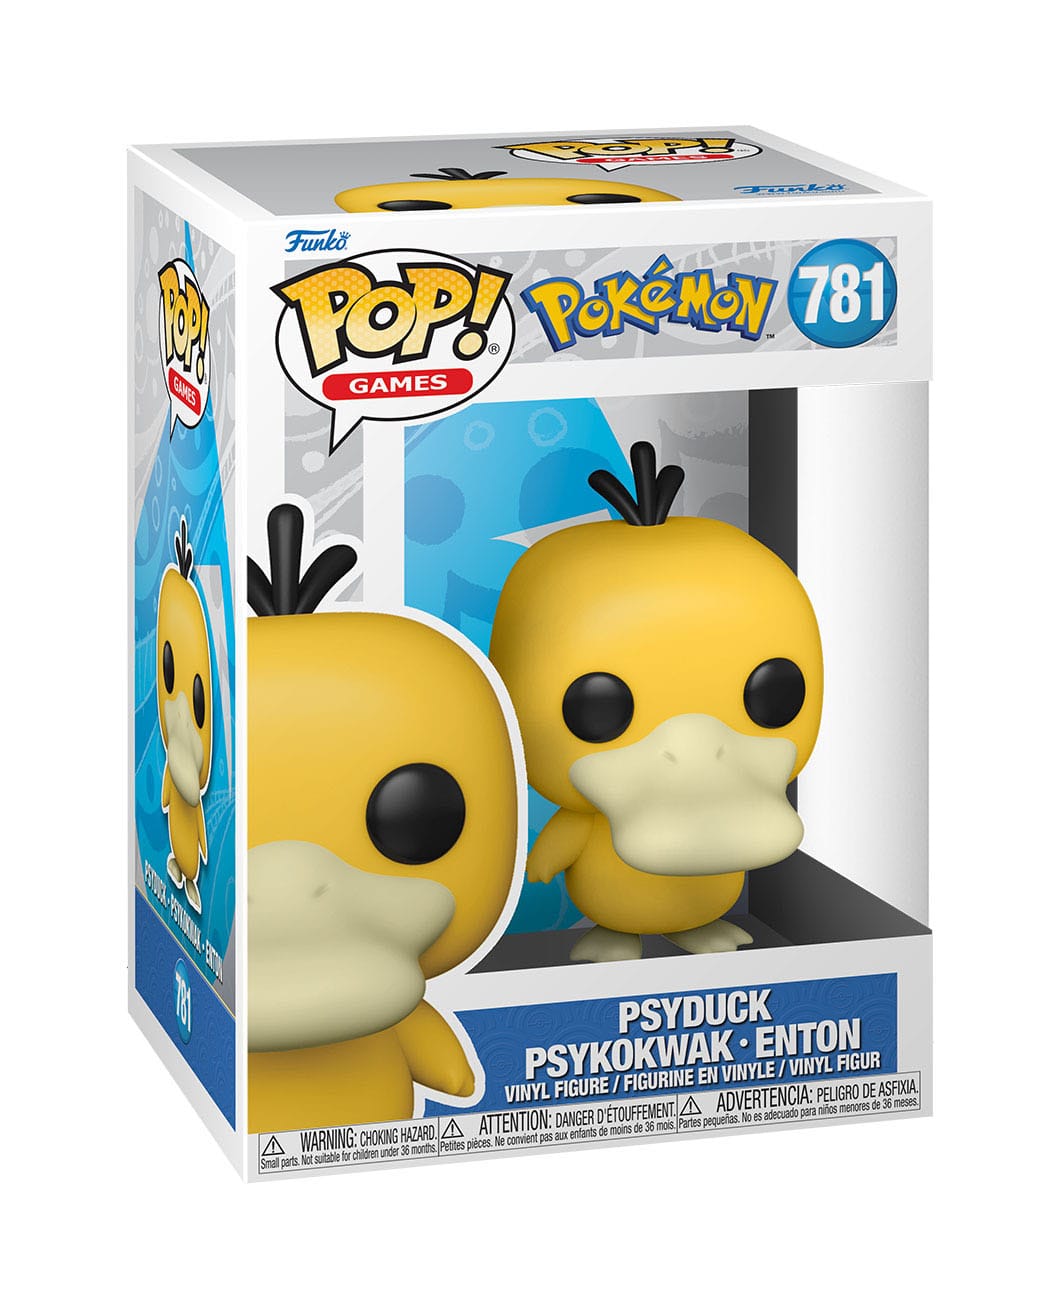 Pokemon - Psyduck 781